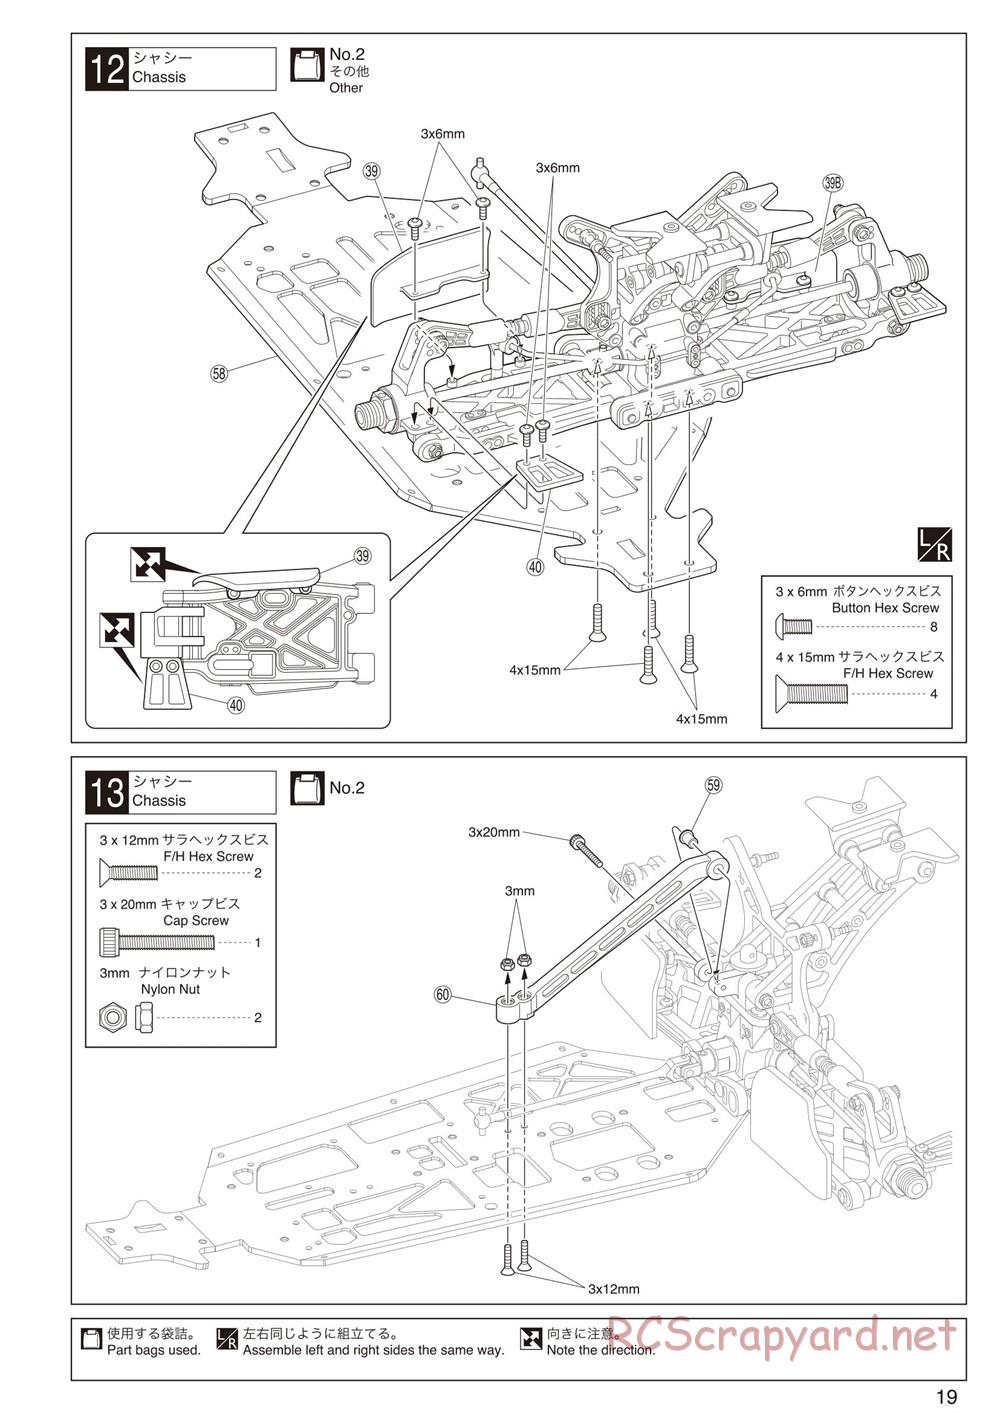 Kyosho - Inferno MP9 TKI4 - Manual - Page 19